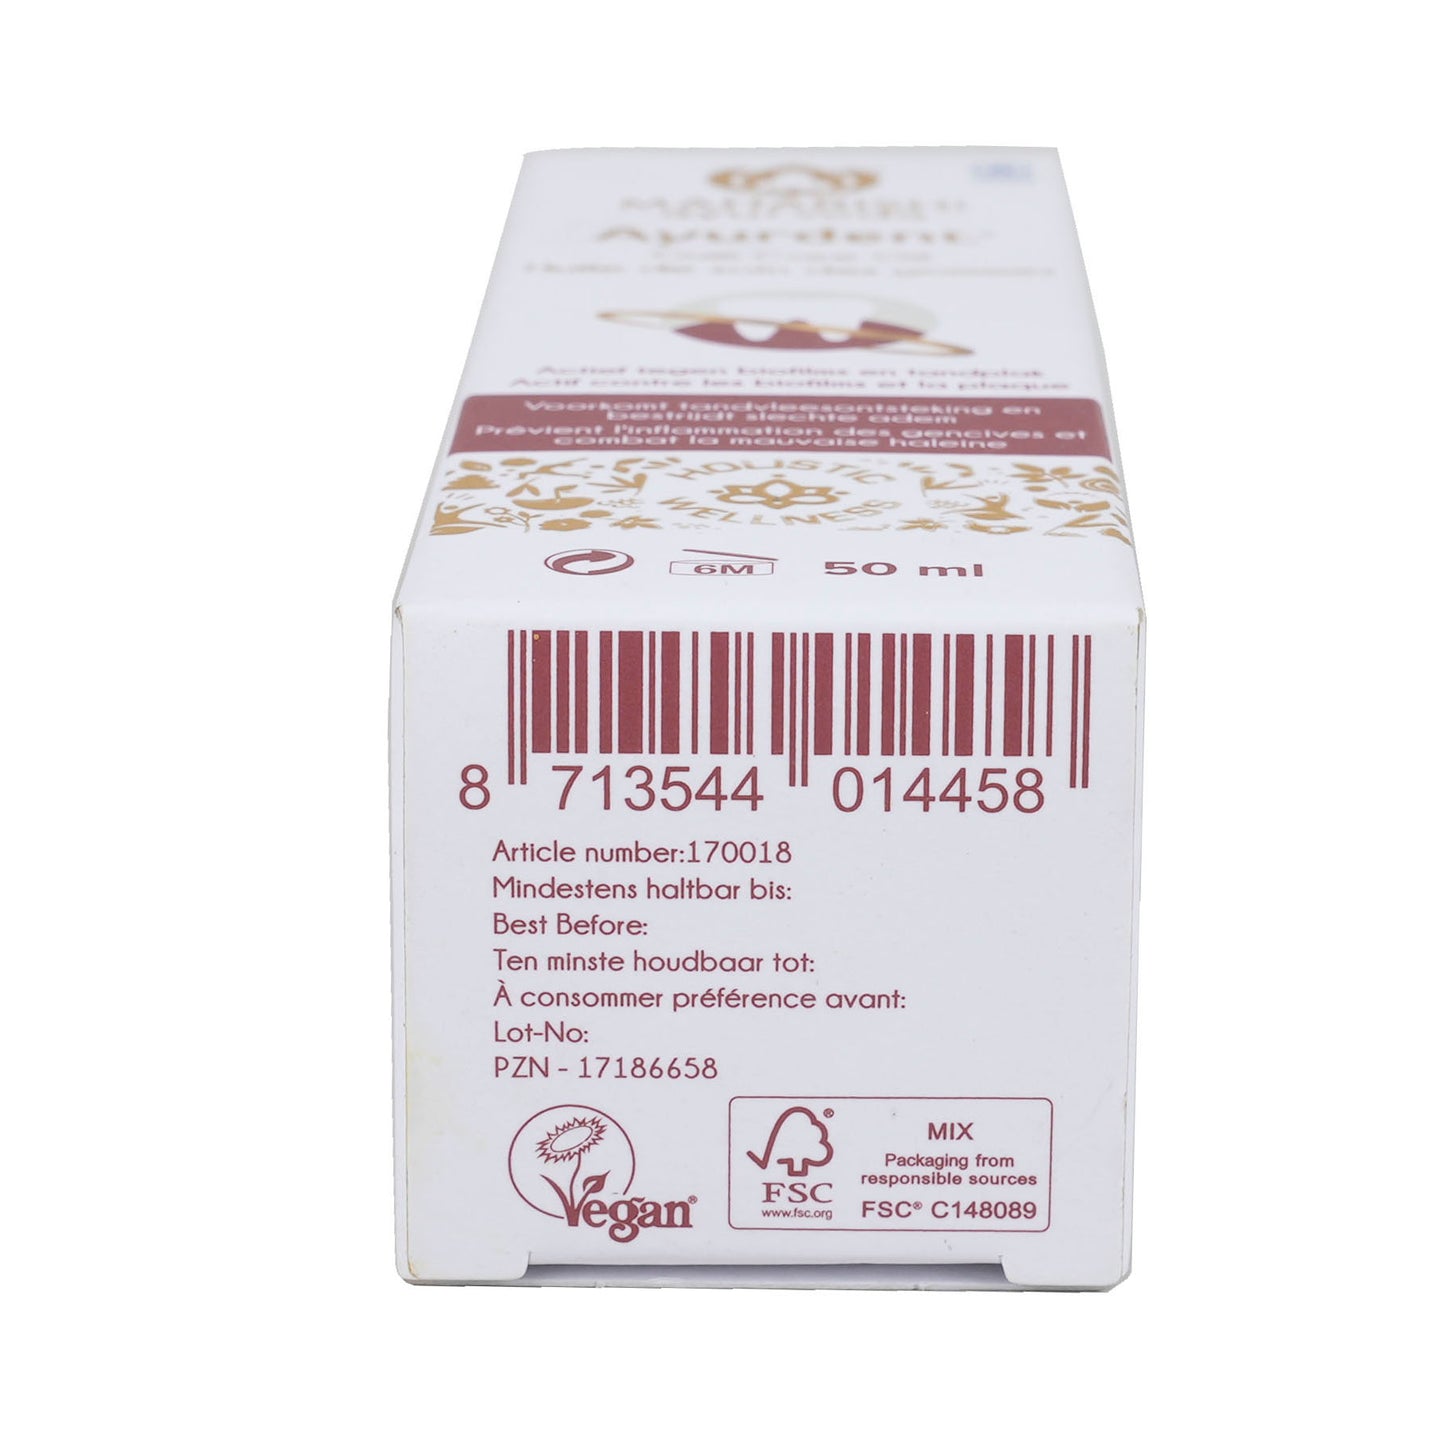 maharishi ayurveda | natural ayurdent gum care oil | 50 ml